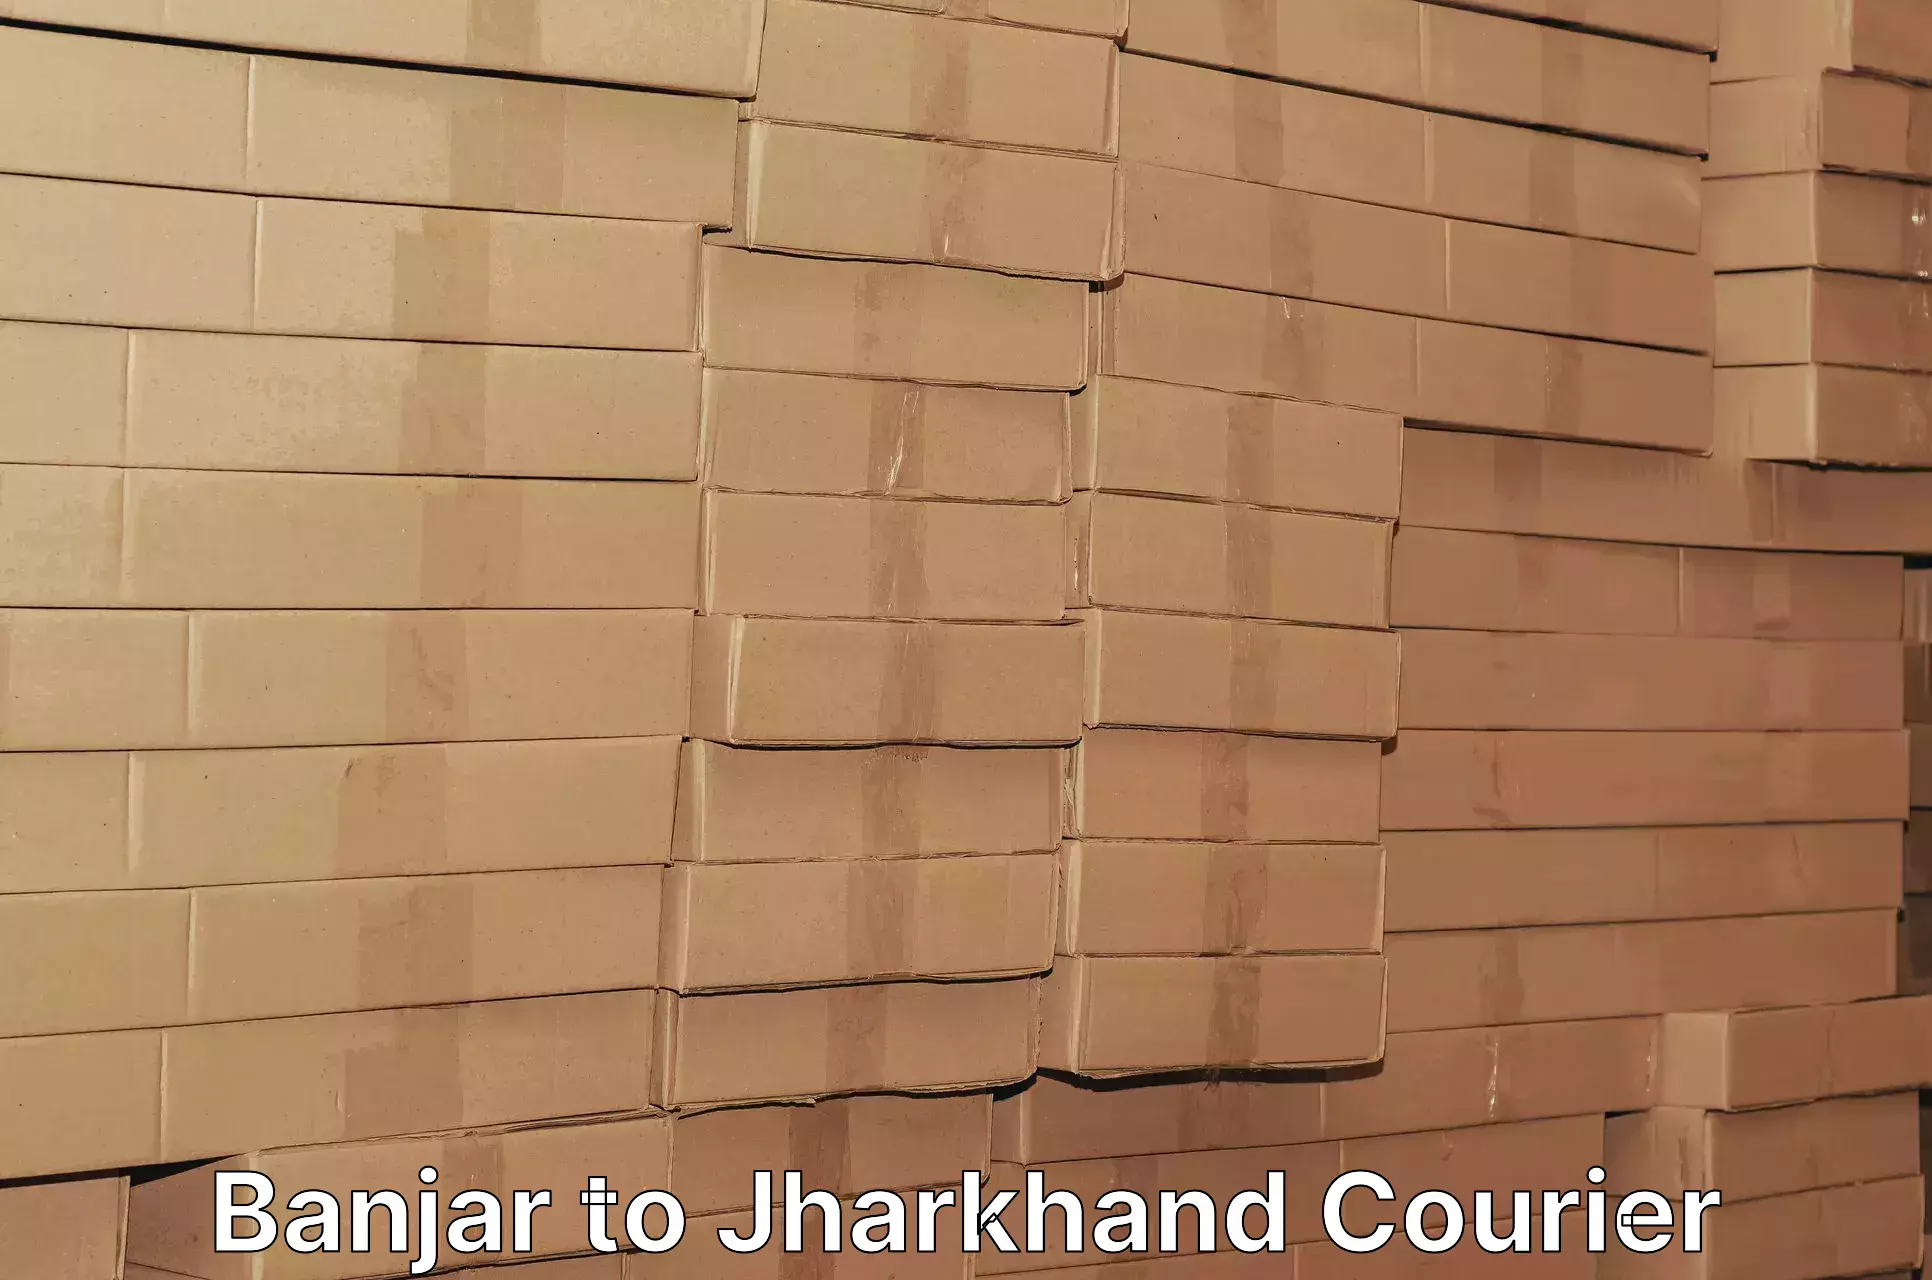 On-demand shipping options Banjar to Jharkhand